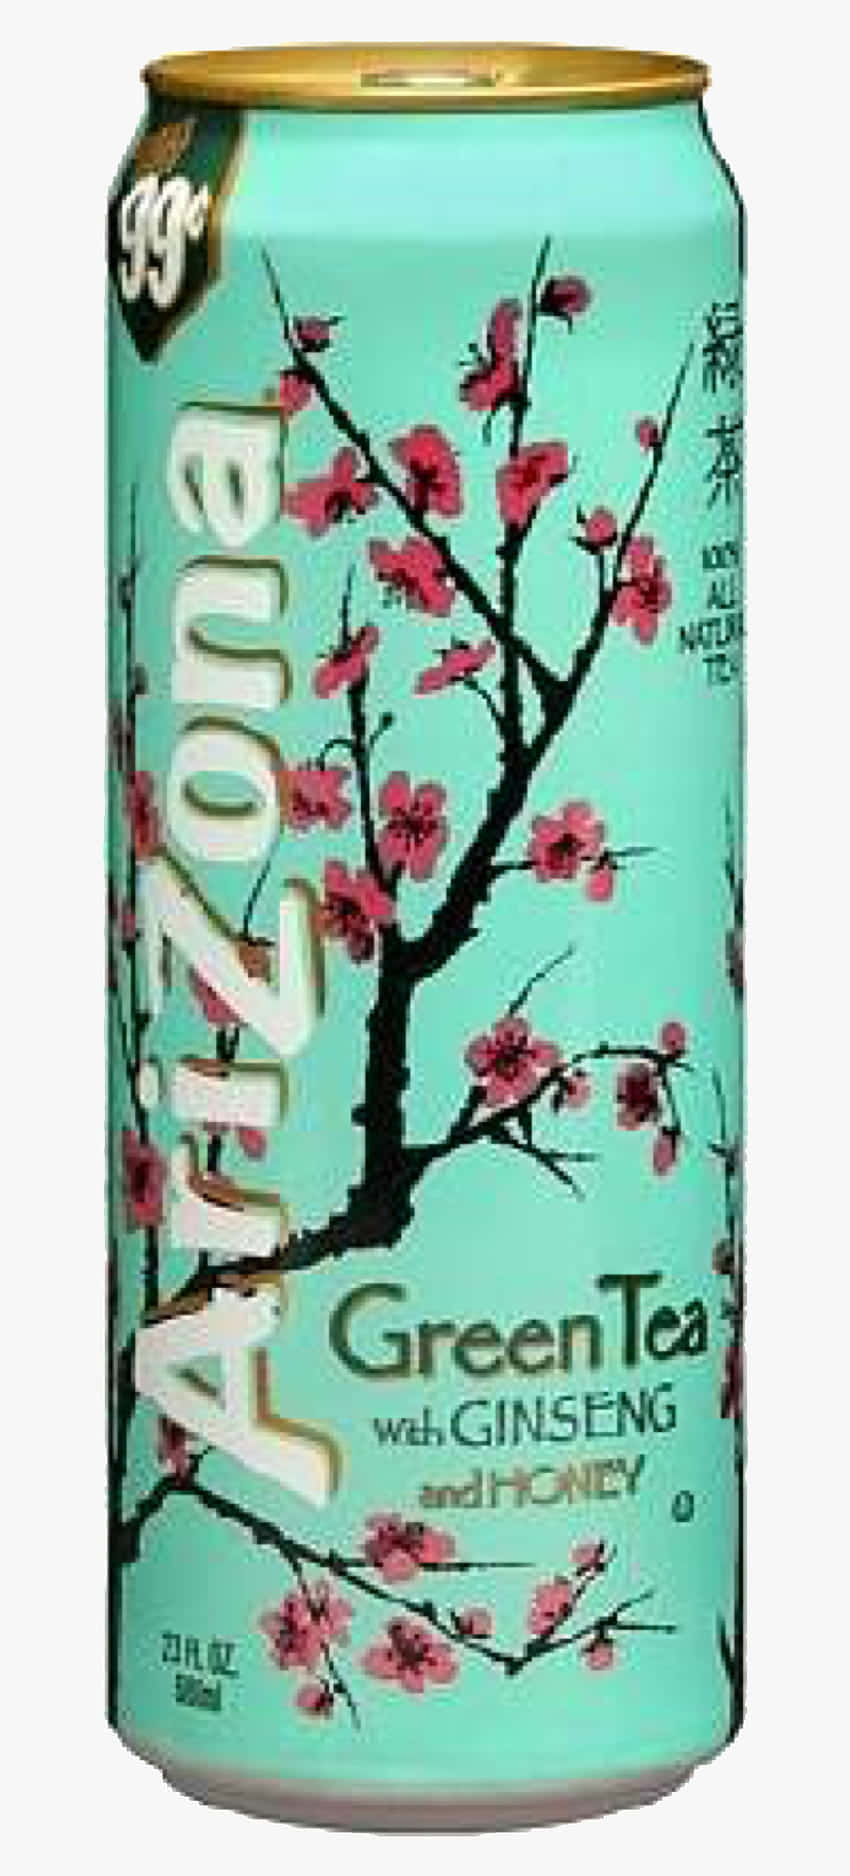 AriZona Beverage Co  Arizona green teas Tea wallpaper Drawings